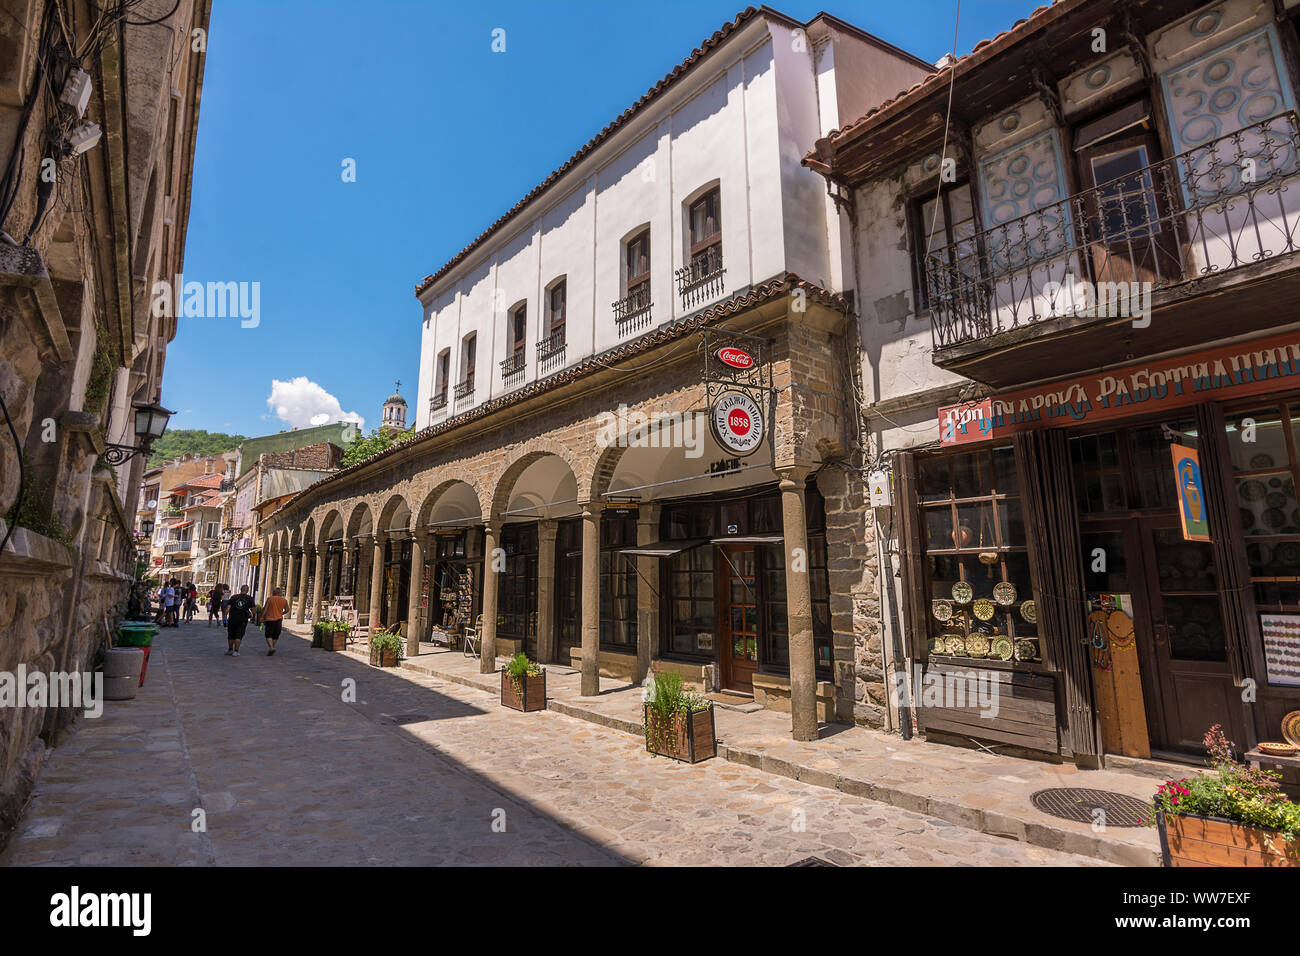 VELIKO TARNOVO, BULGARIA - 20 June 2019: a tourist street with people in the center of Veliko Tarnovo on a sunny day Stock Photo